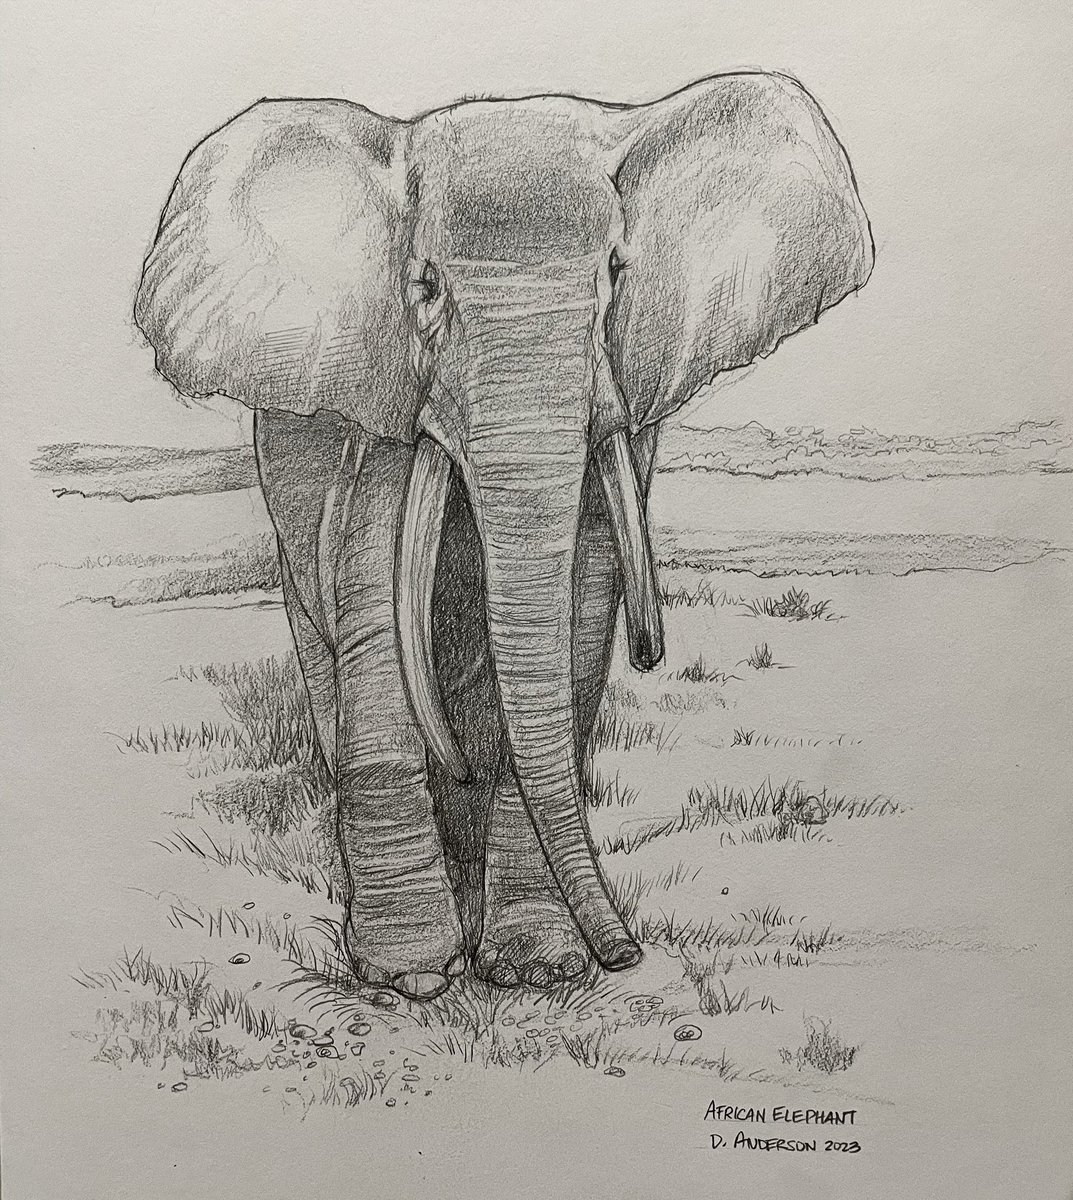 African elephant. 

#africanelephant #elephant #elephantart #wildlifeart #zooart #animalart #wildlifeconservation #nature #wildlife #sketch #drawing #drawingsketch #sketchdaily #parabolastar #michiganartist #michiana